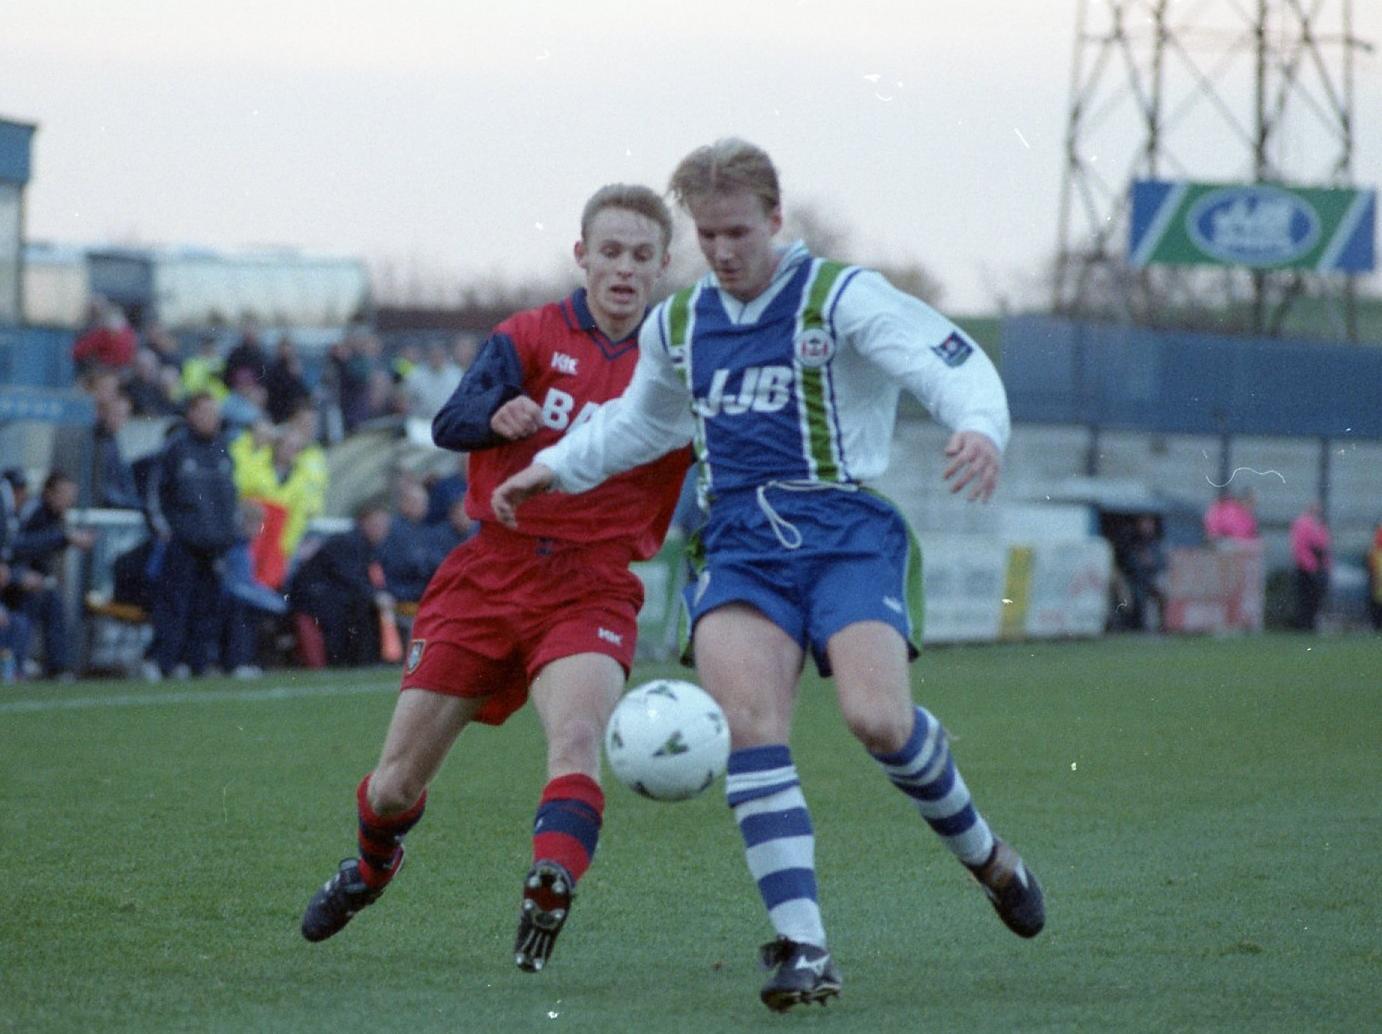 Lee Cartwright scored twice in Preston's 4-1 win over Wigan at Springfield Park in November 1997